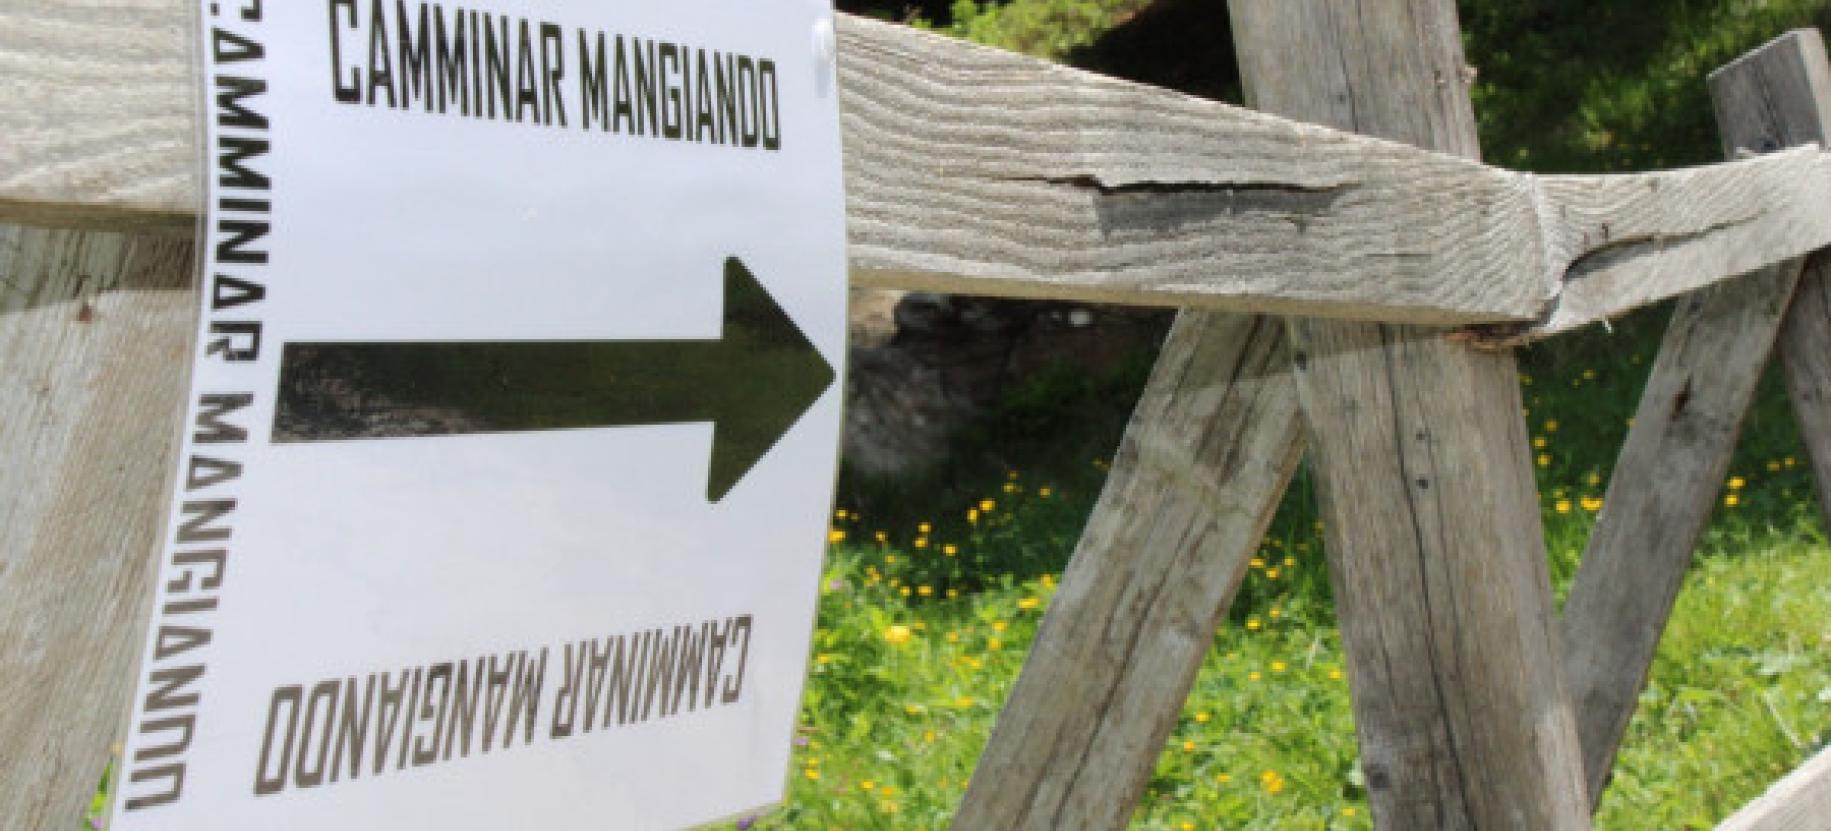 Camminar Mangiando - Route Crest